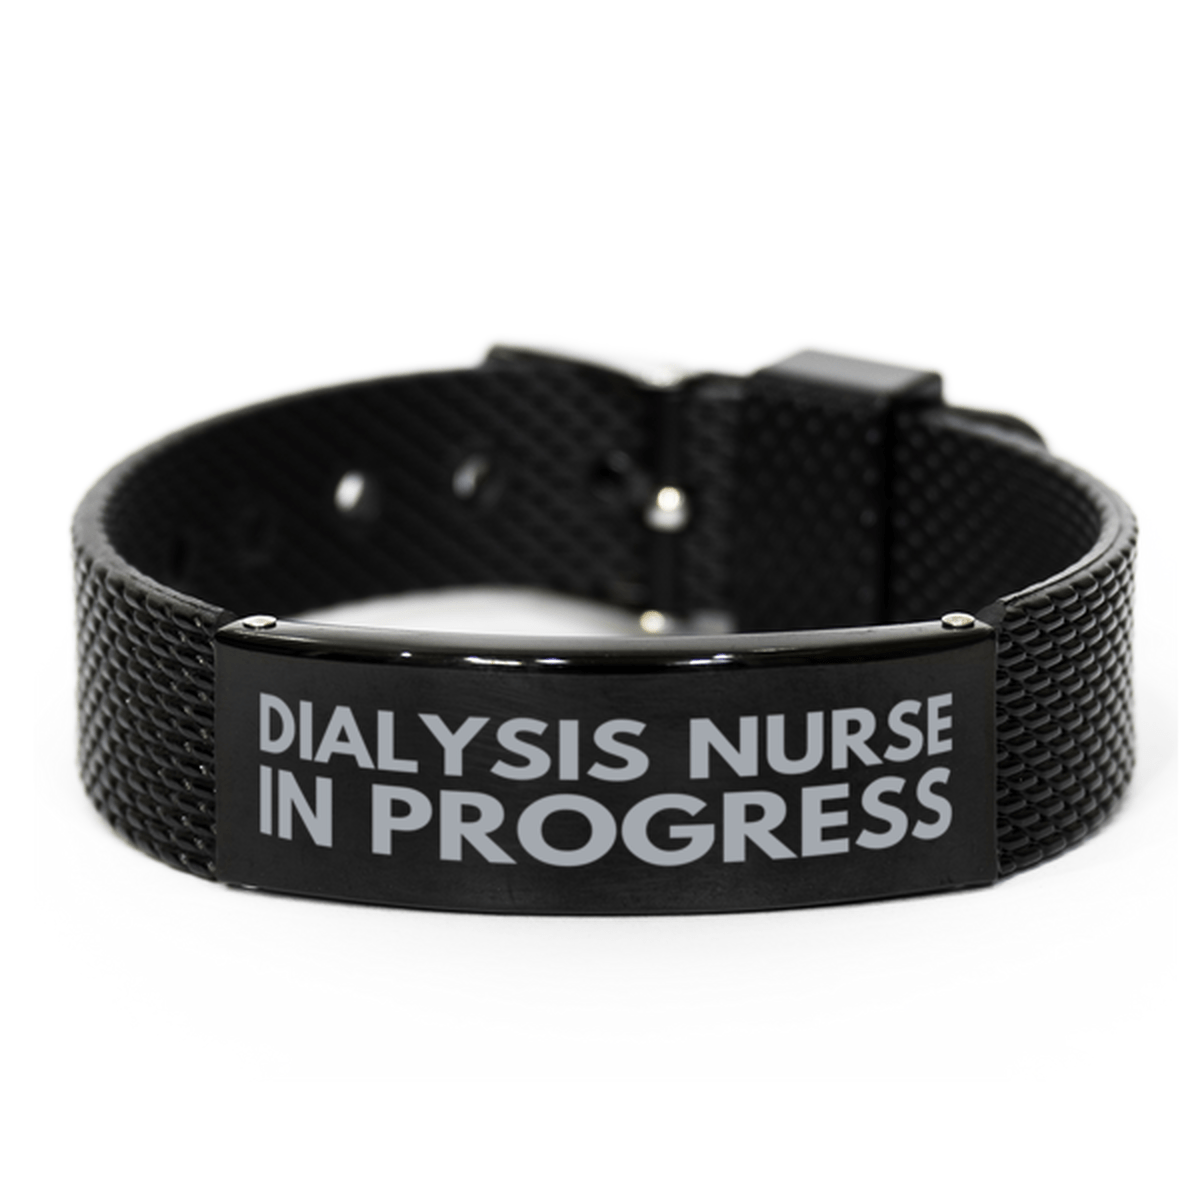 Inspirational Dialysis Nurse Black Shark Mesh Bracelet, Dialysis Nurse In Progress, Best Graduation Gifts for Students